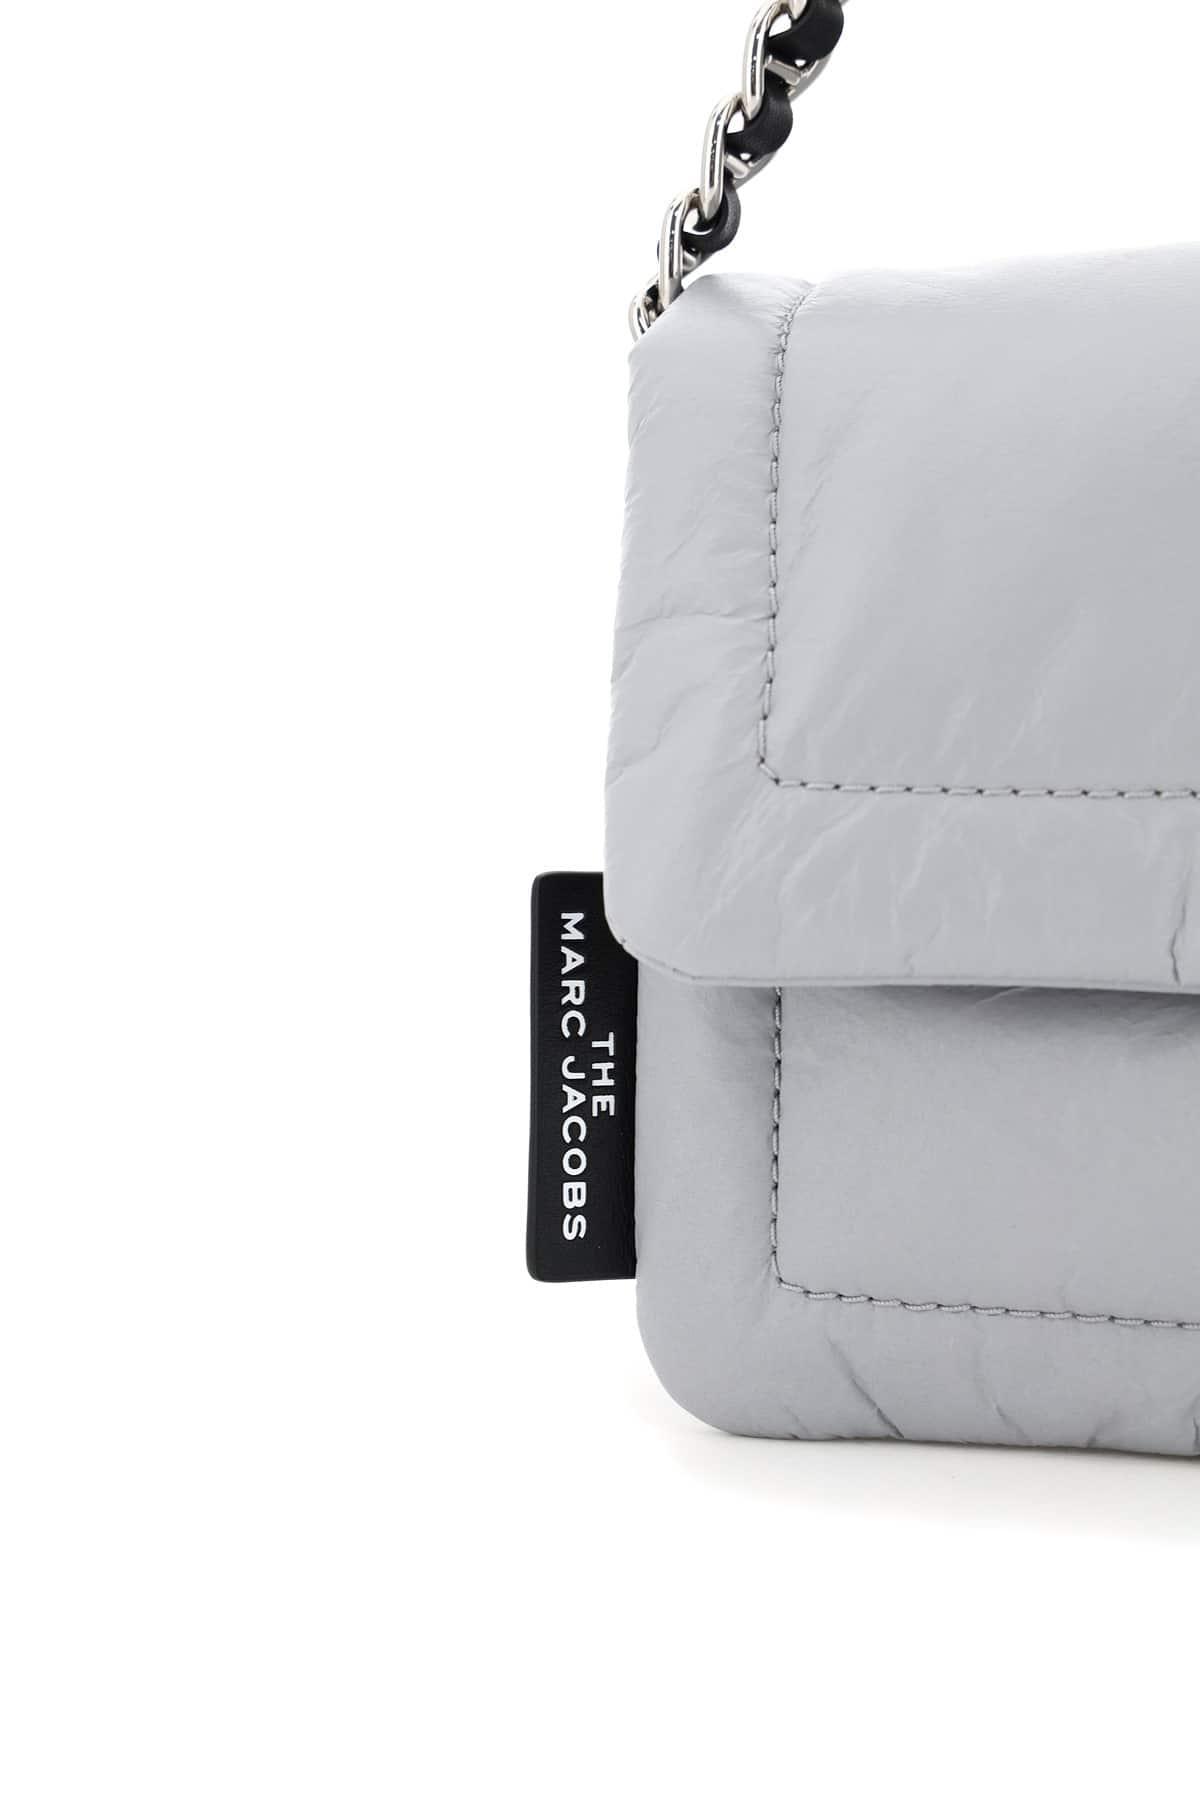 Marc Jacobs - Not-so-heavy lifting 💪 THE Mini Pillow Bag